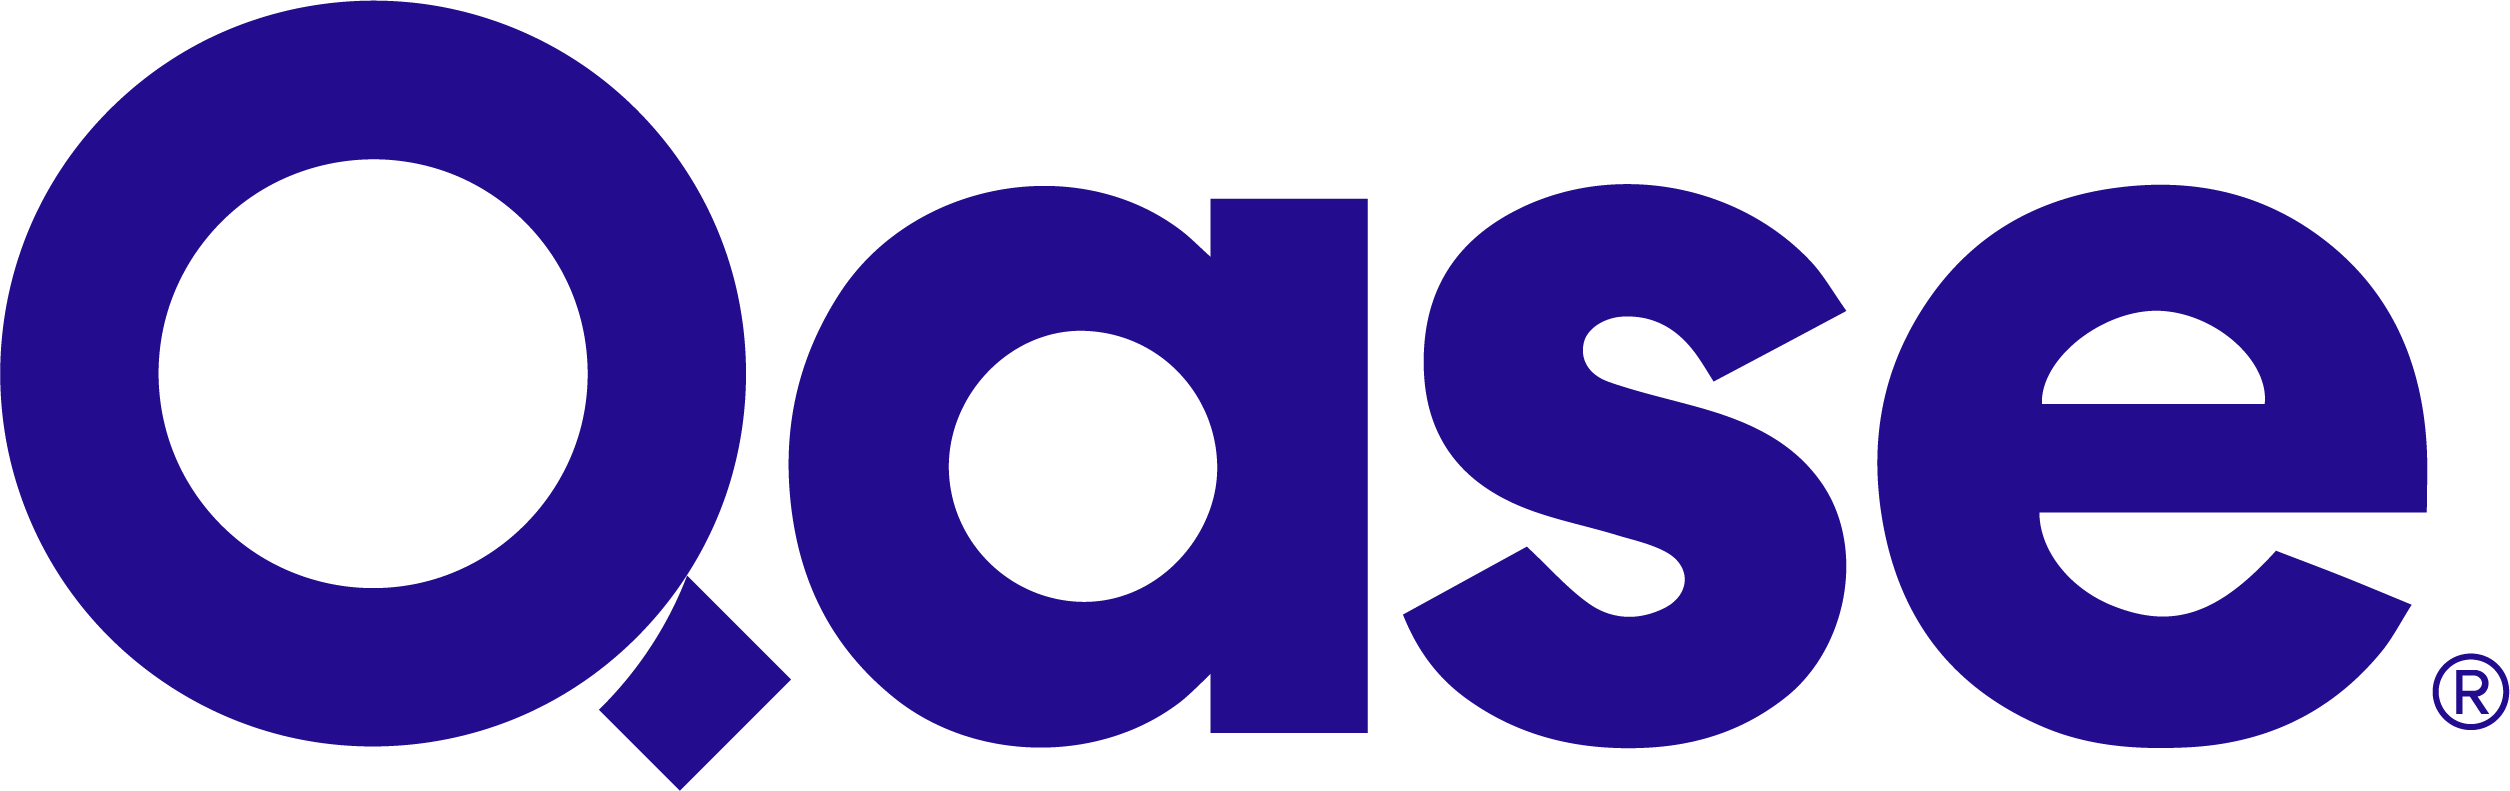 Qase-Logo-Color